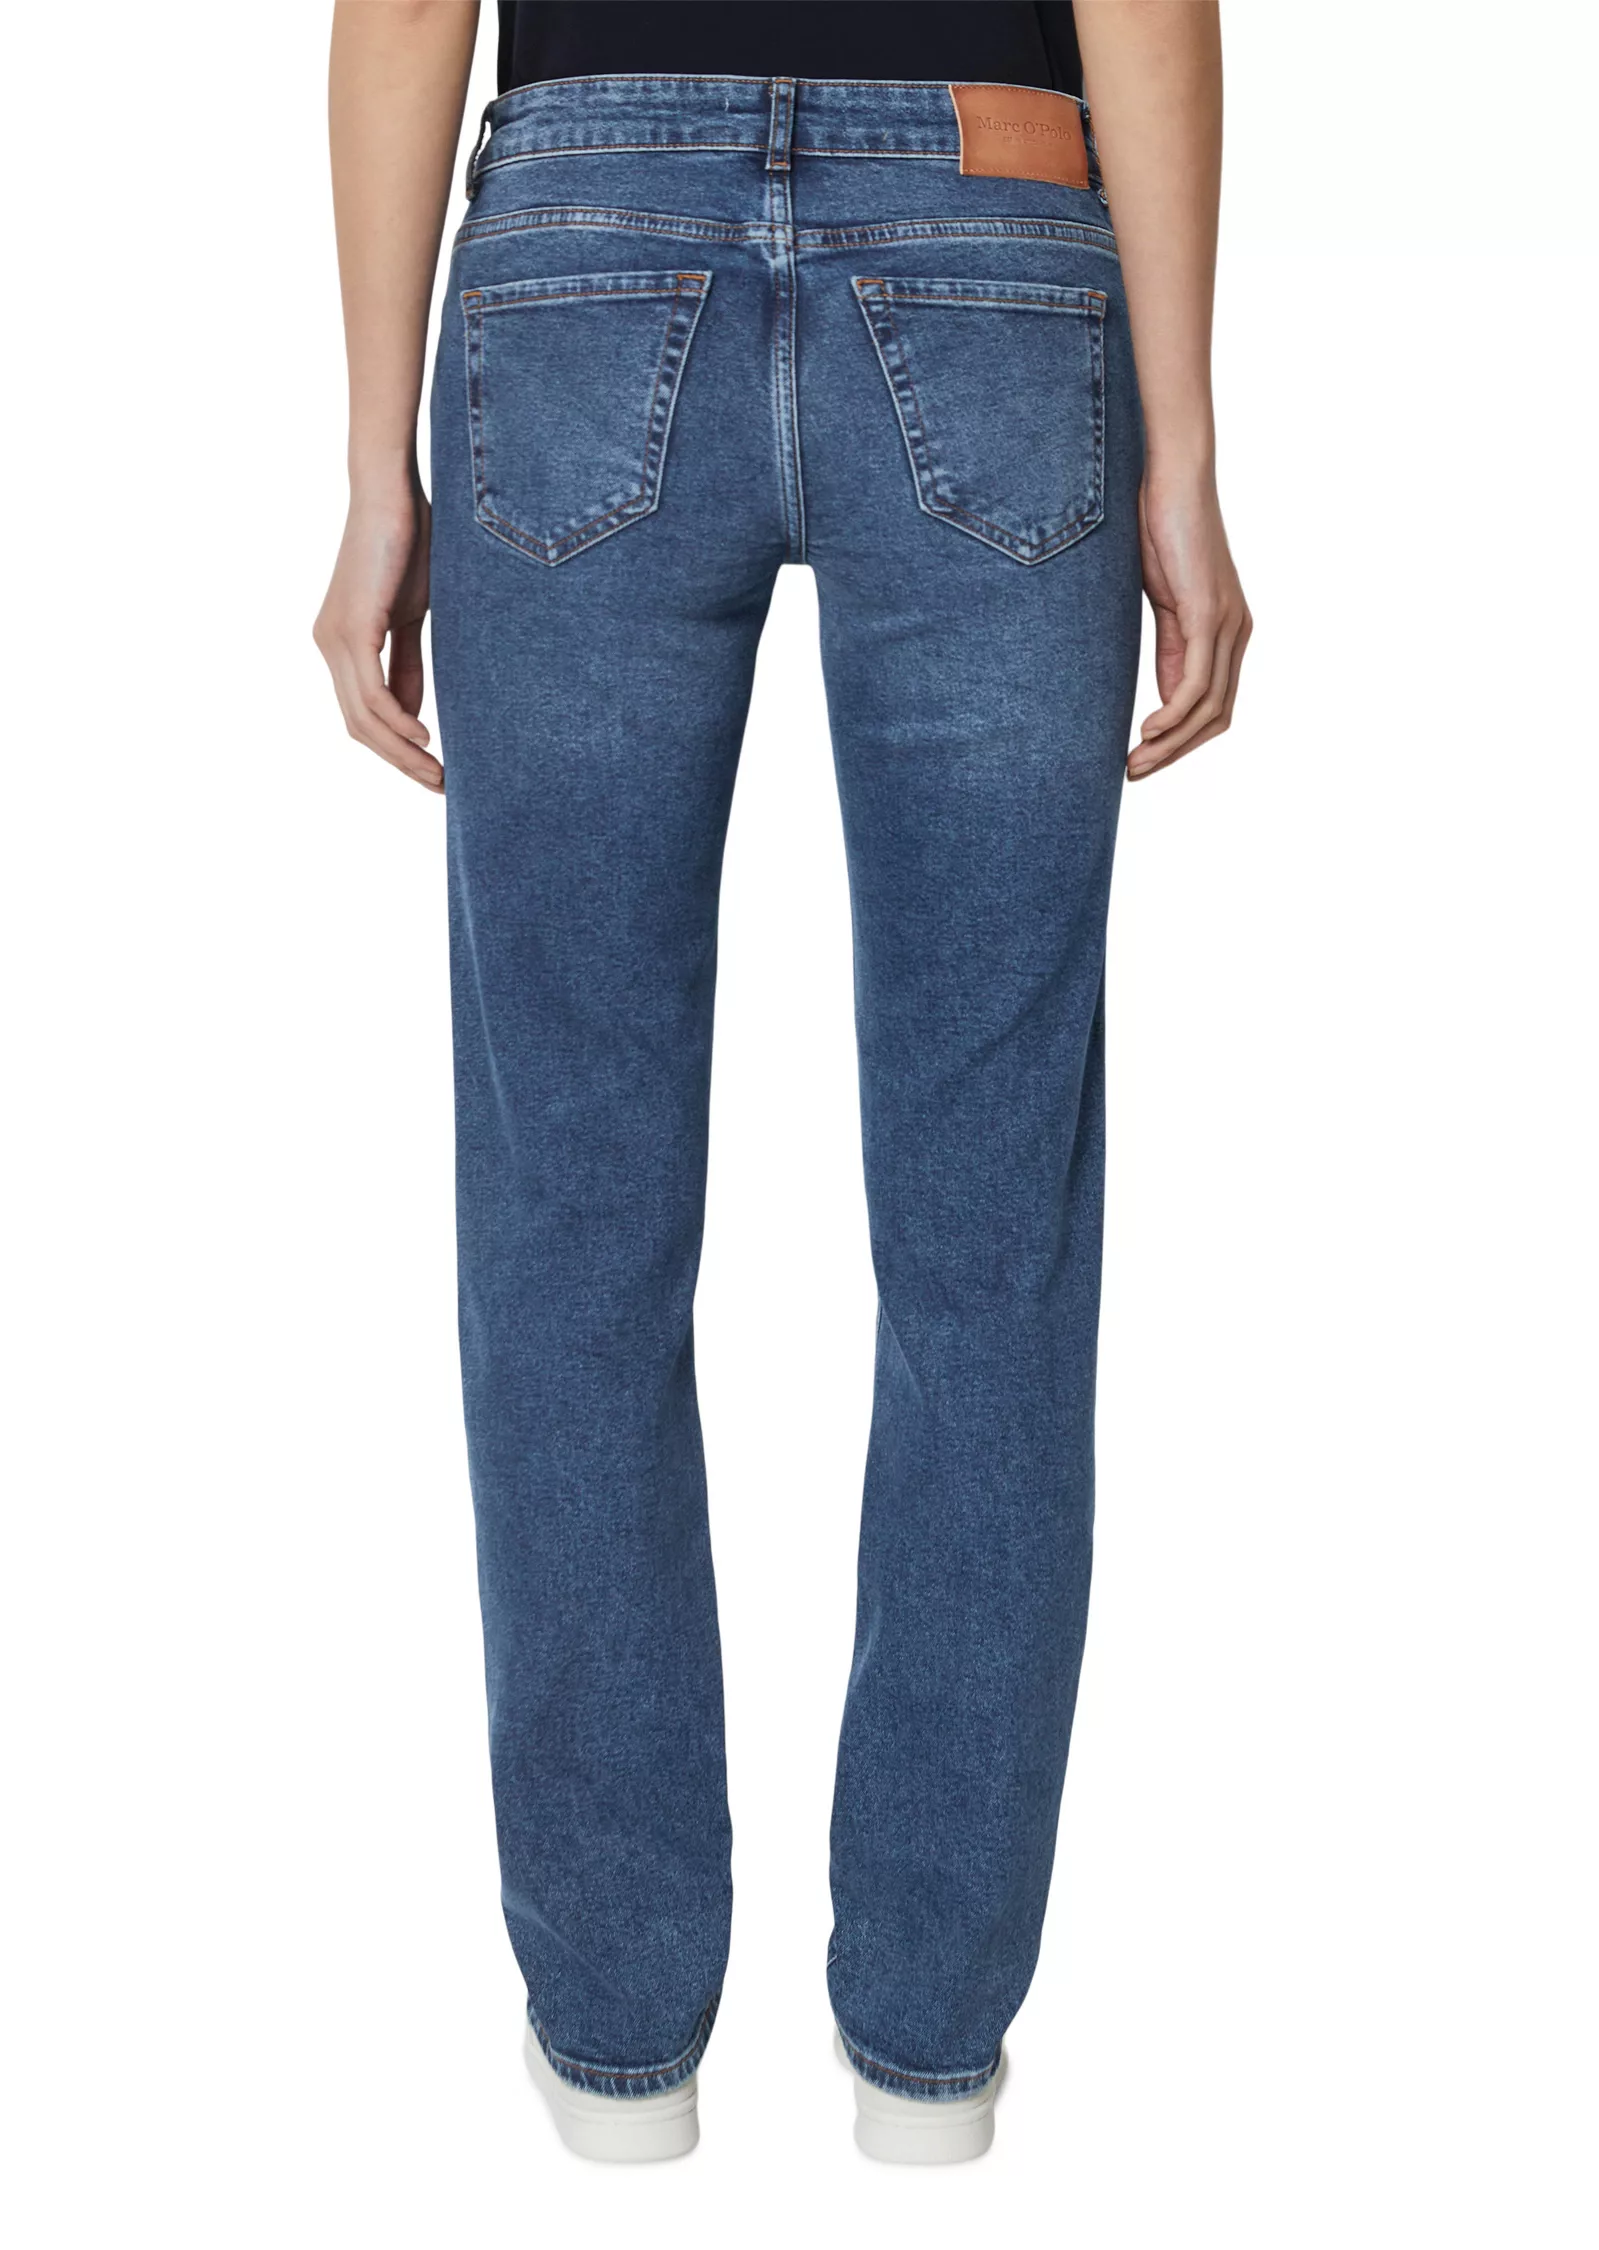 Marc O'Polo 5-Pocket-Jeans Denim trouser, straight fit, regula günstig online kaufen